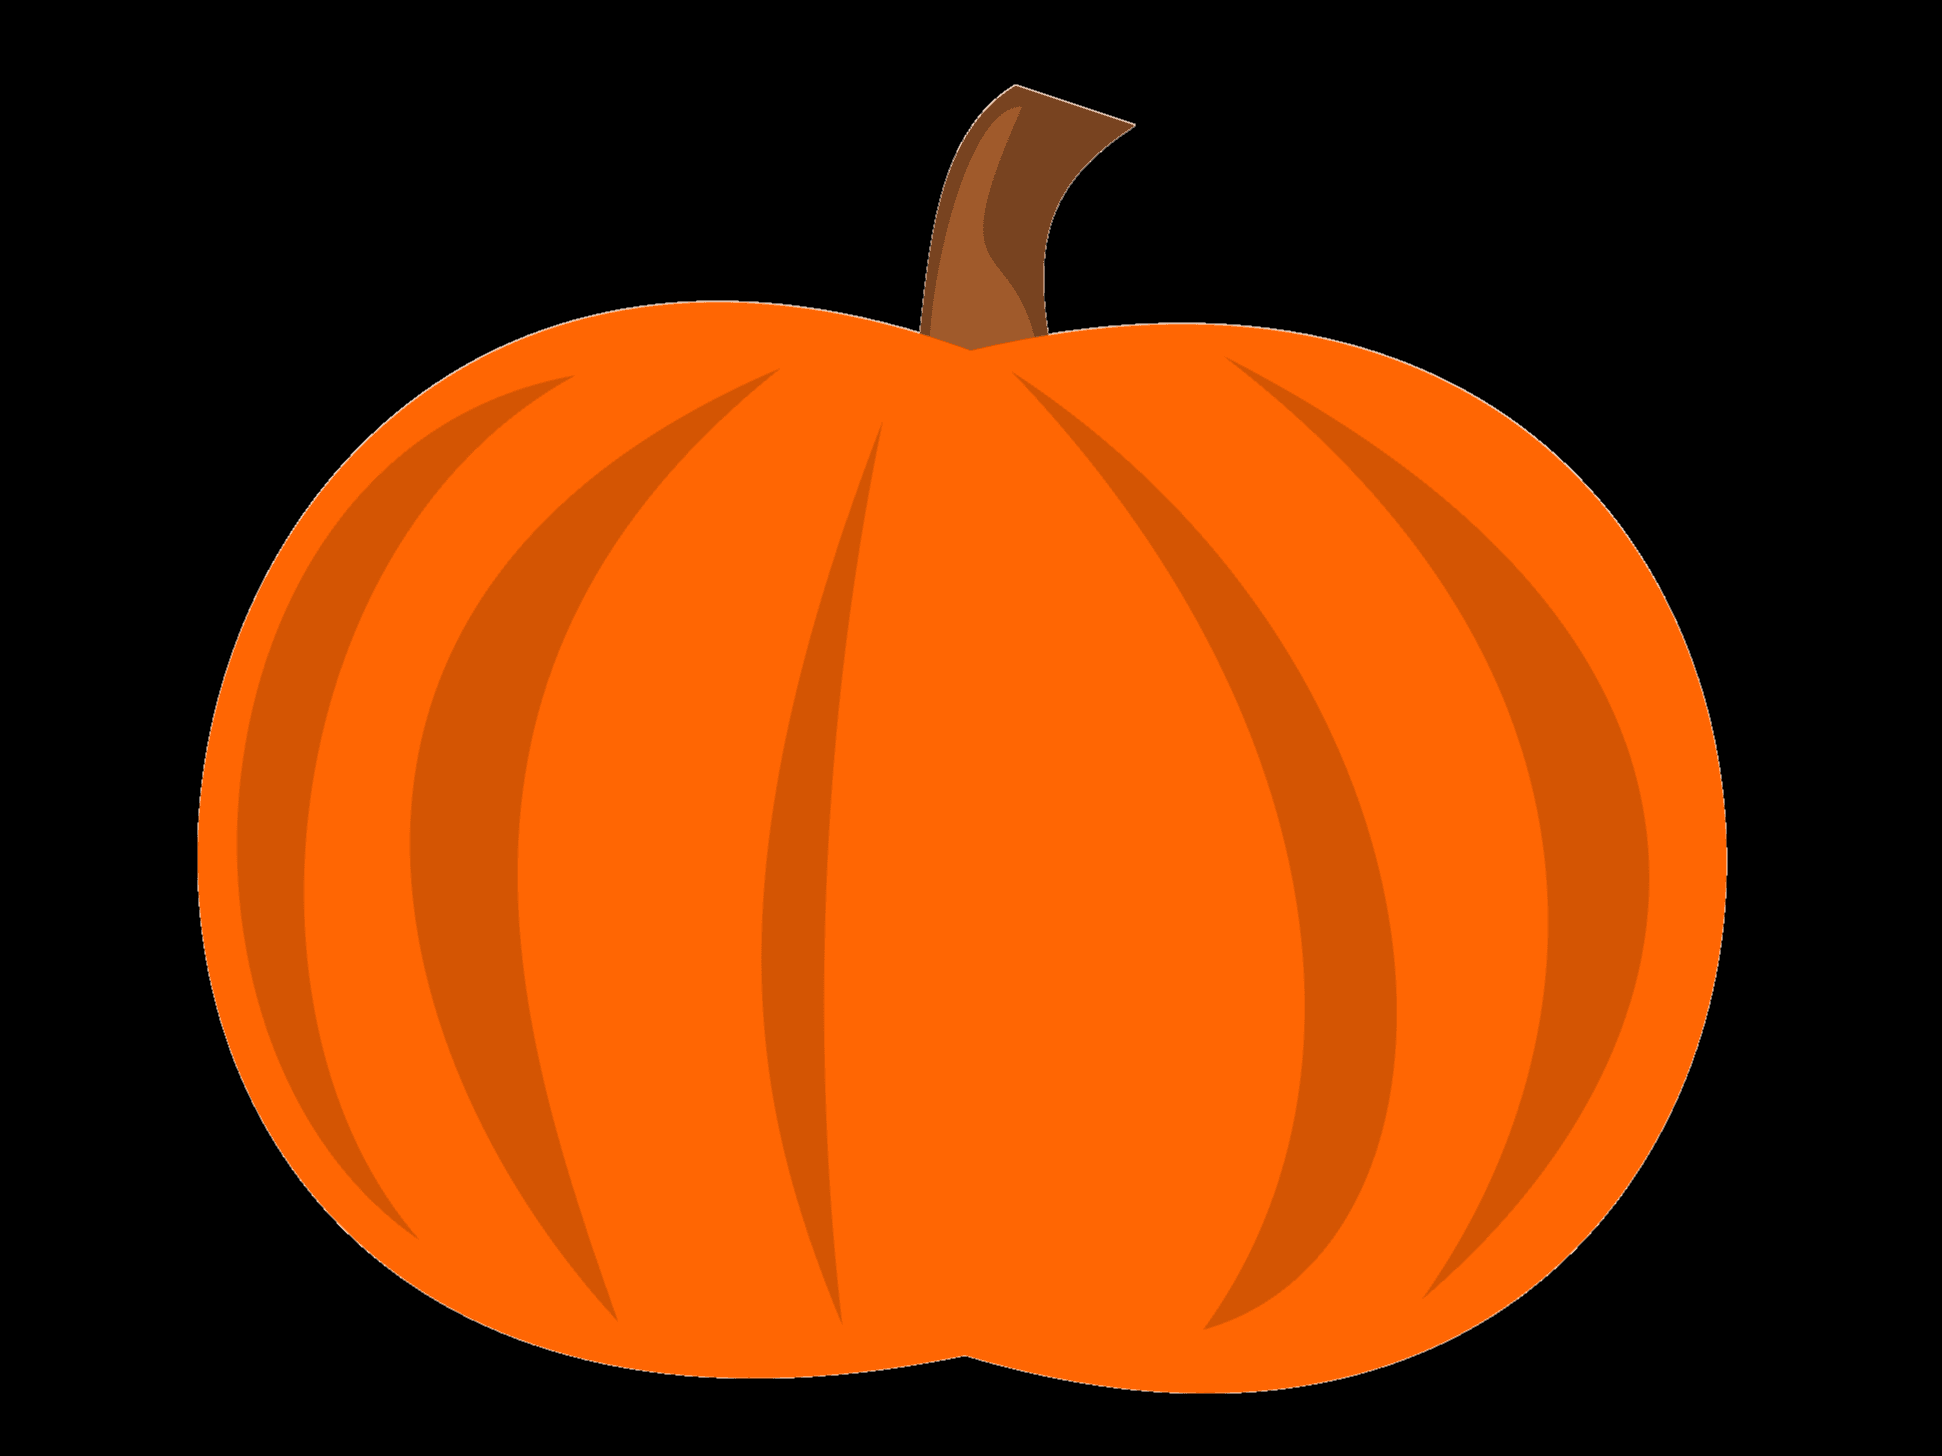 Carve your own pumpkin